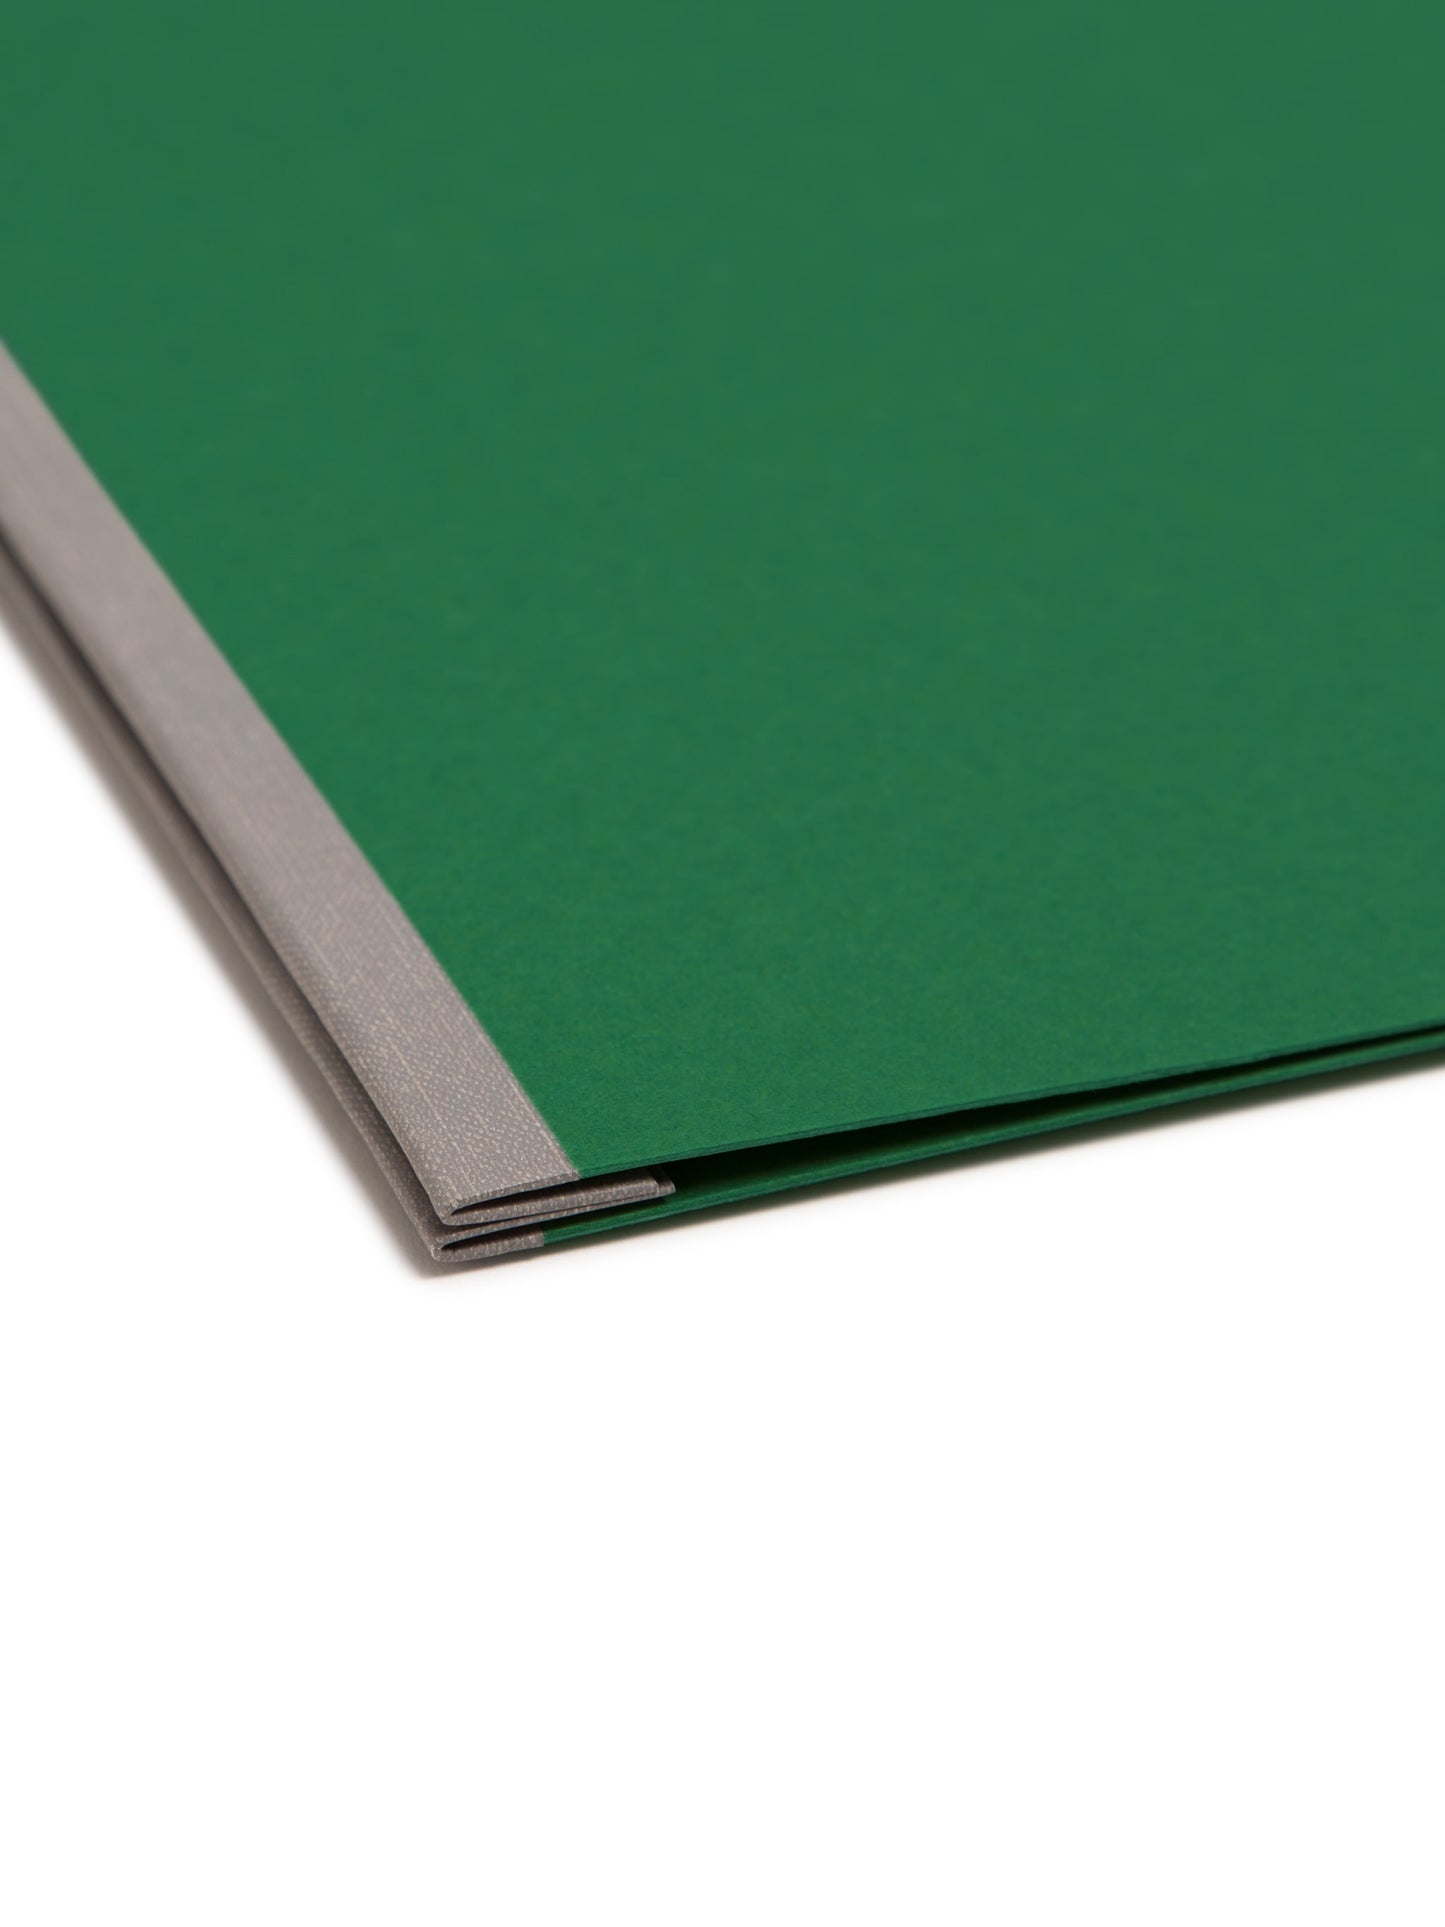 Premium Pressboard Report Covers, Metal Prong with Compressor, Side Fastener, 3 inch Expansion, 1 Fastener, Green Color, Letter Size, Set of 0, 30086486814516